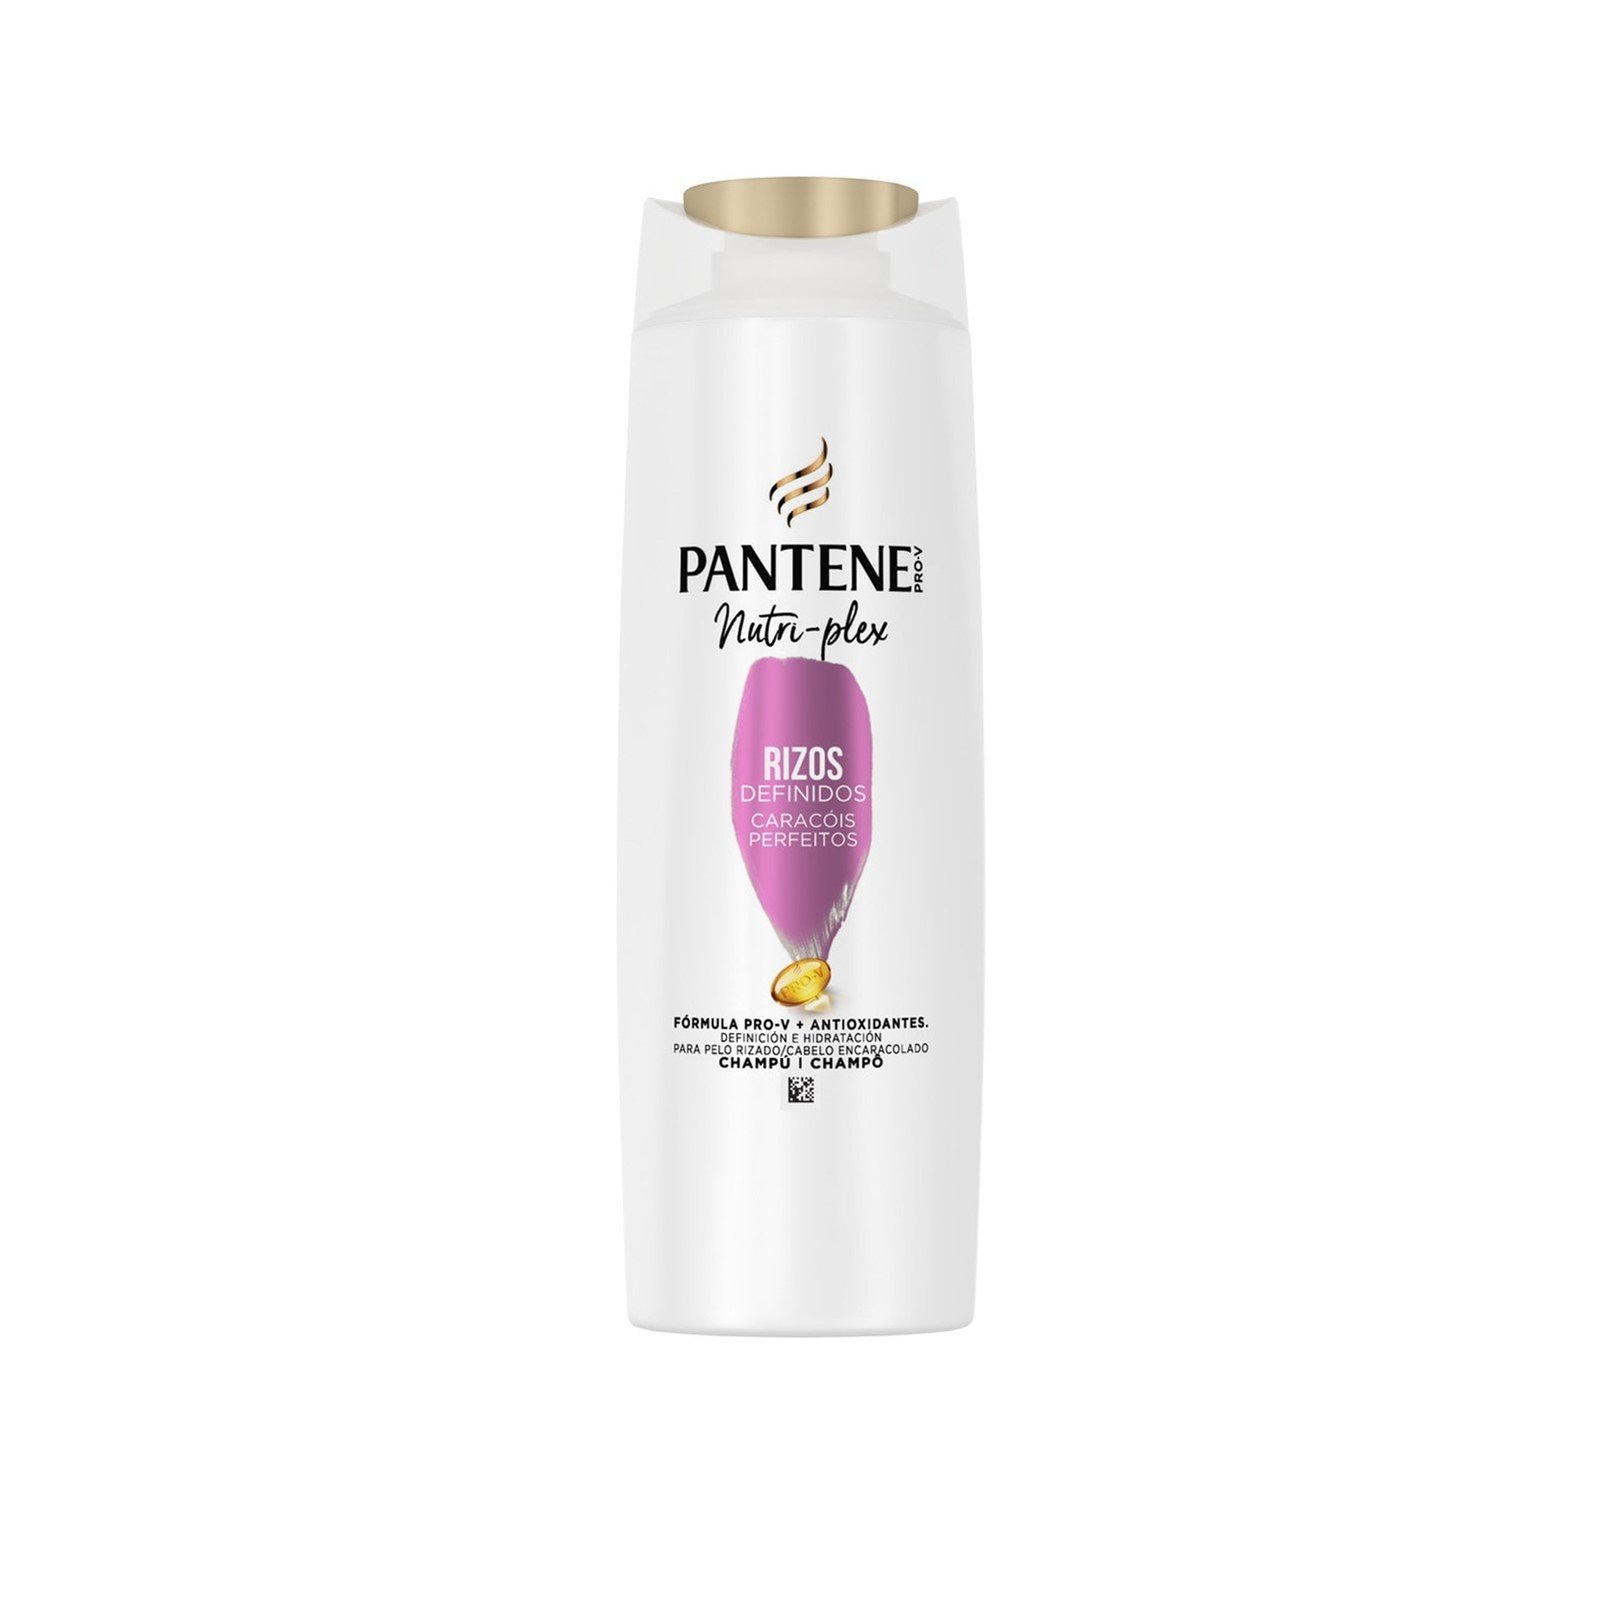 Pantene Pro-V Nutri-Plex Defined Curls Shampoo 600ml (20.28 fl oz)